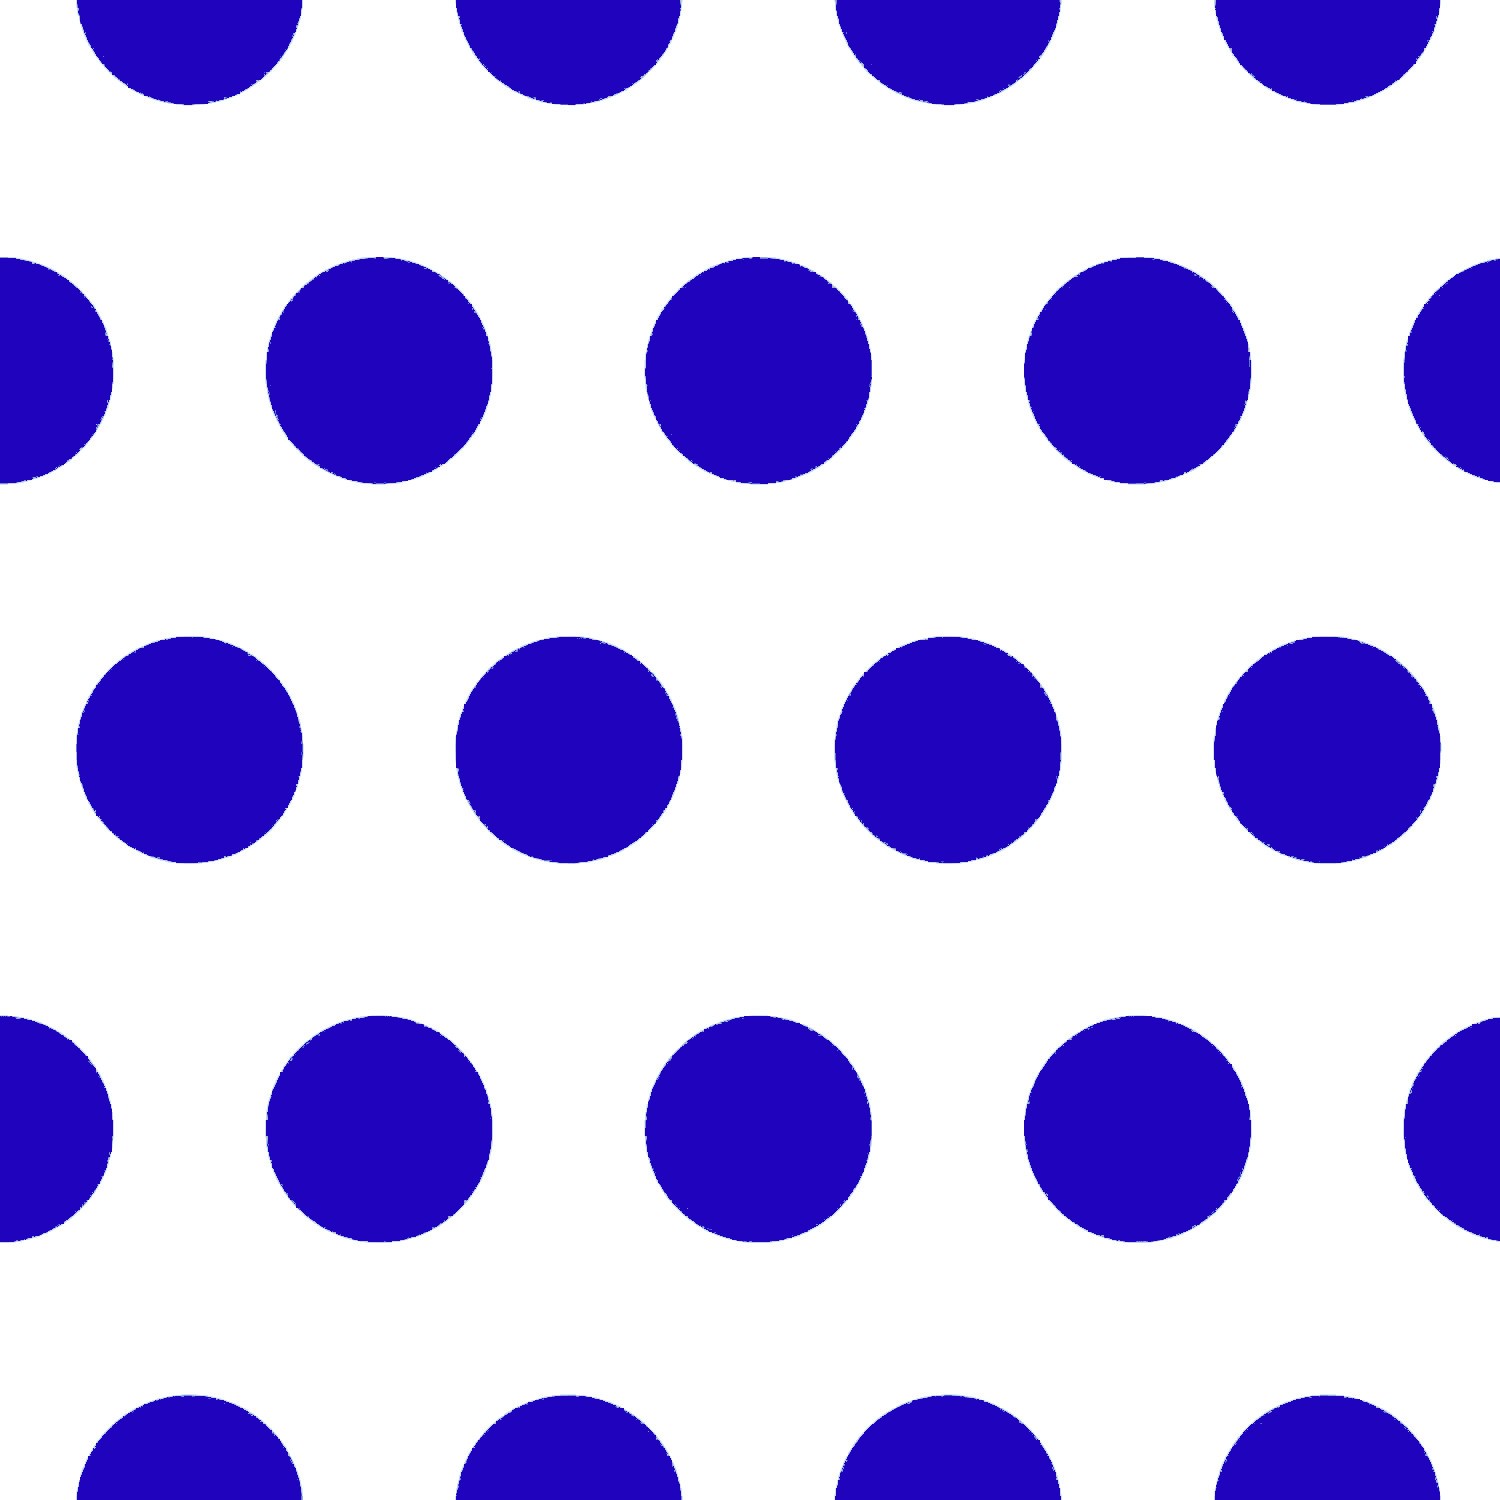 Dark blue dots